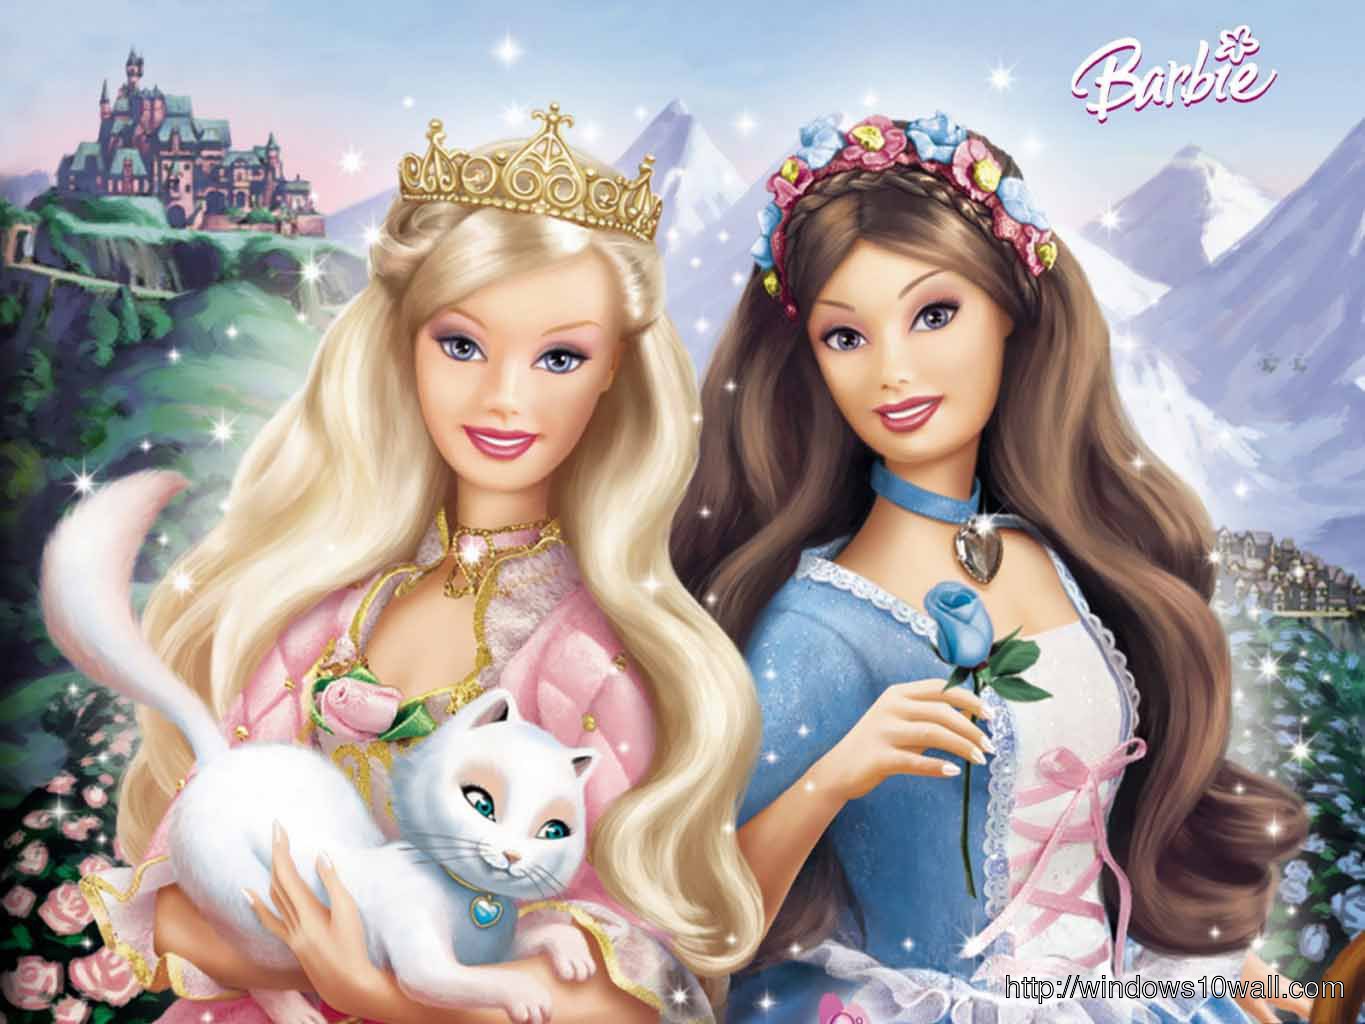 Wallpaper Barbie Girl Cartoon Image